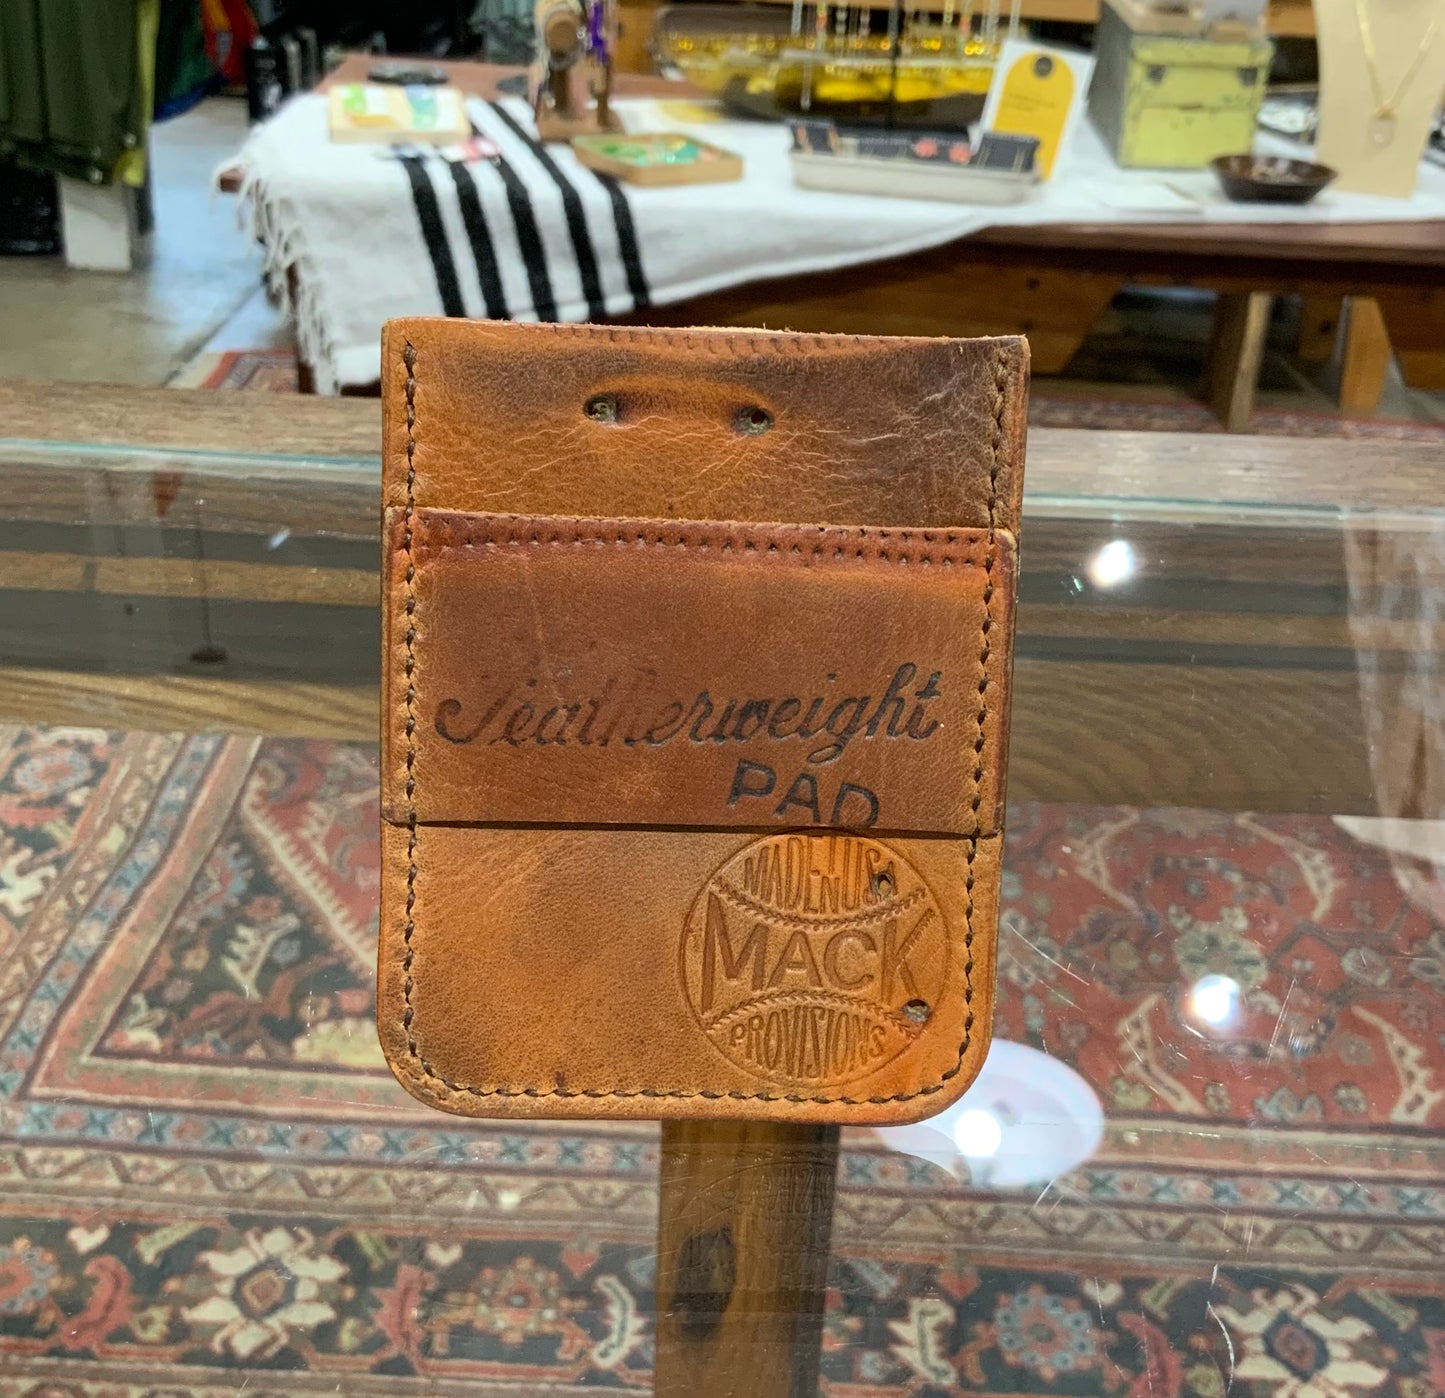 Mack Provisions Vintage Baseball Glove Card Holder